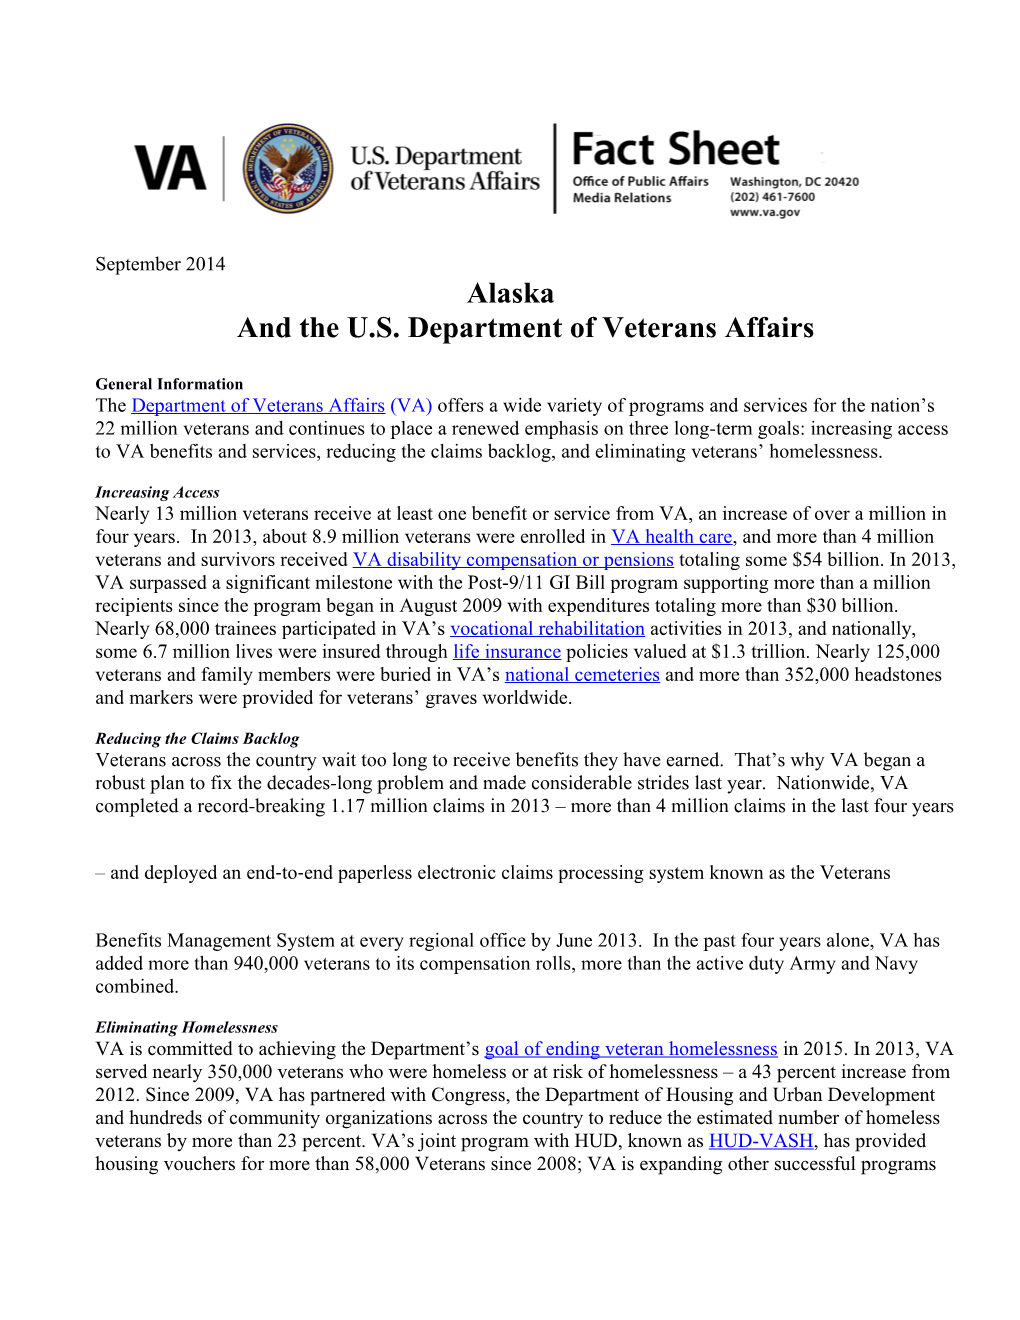 Alaskaand the U.S. Department of Veterans Affairs